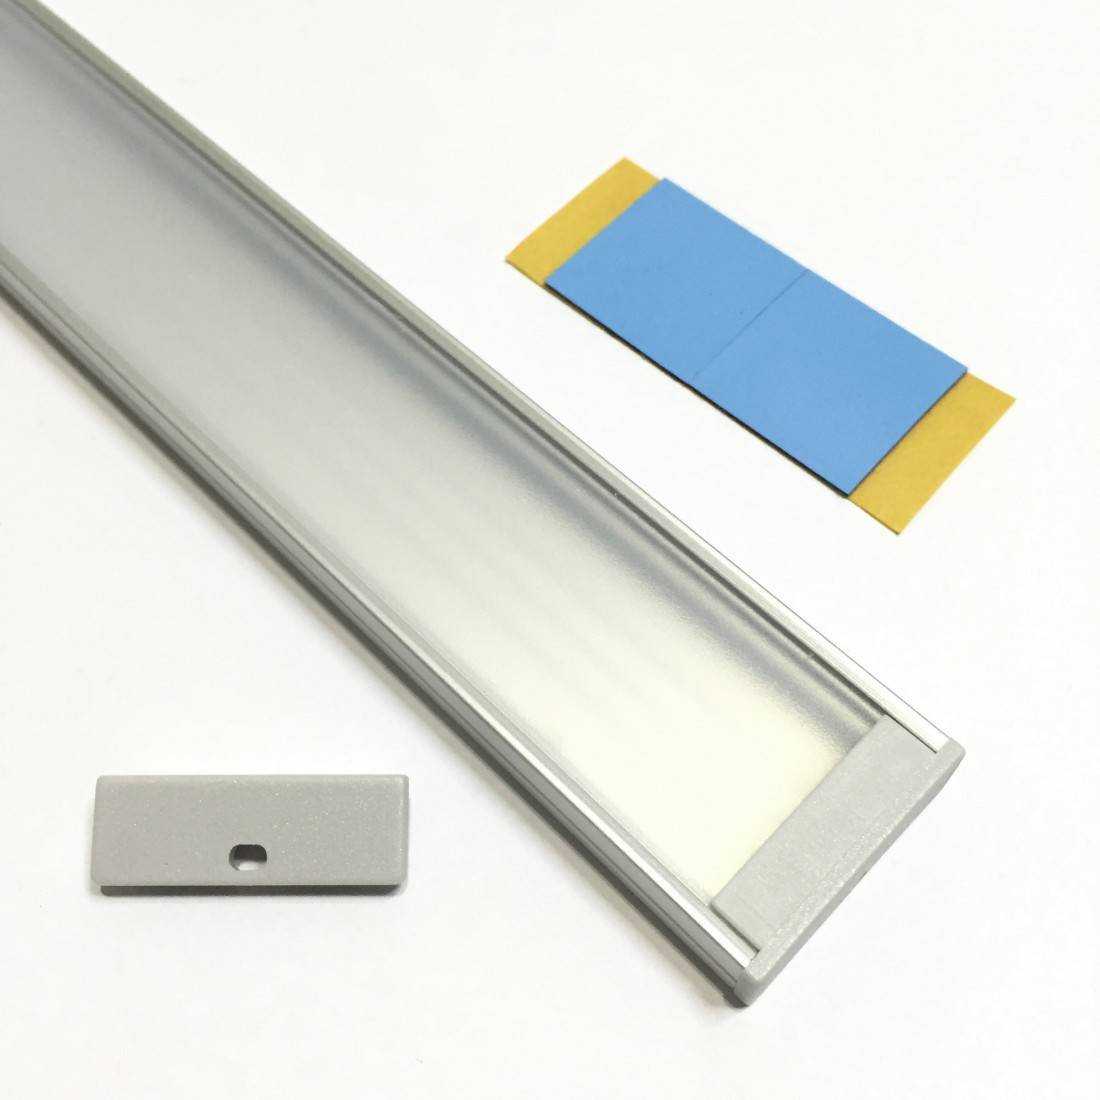 Profilé ruban LED Potenza aluminium plat 1m avec couvercle transparent